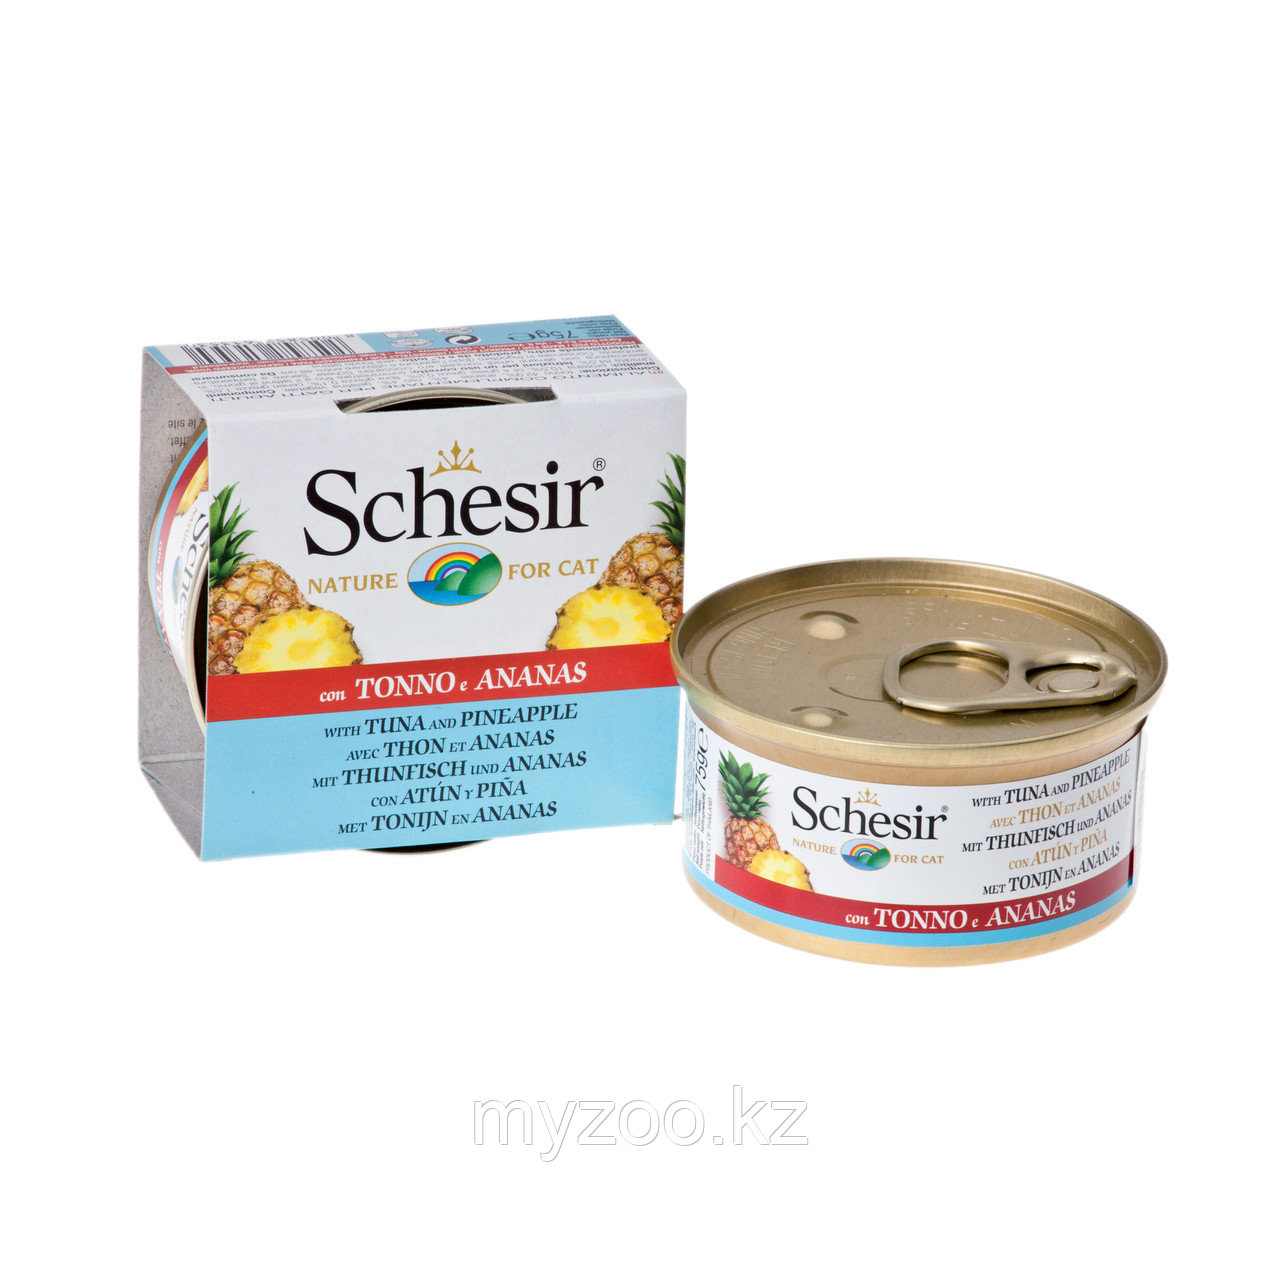 Schesir для кошек с тунцом, ананасои и рисом 75 гр